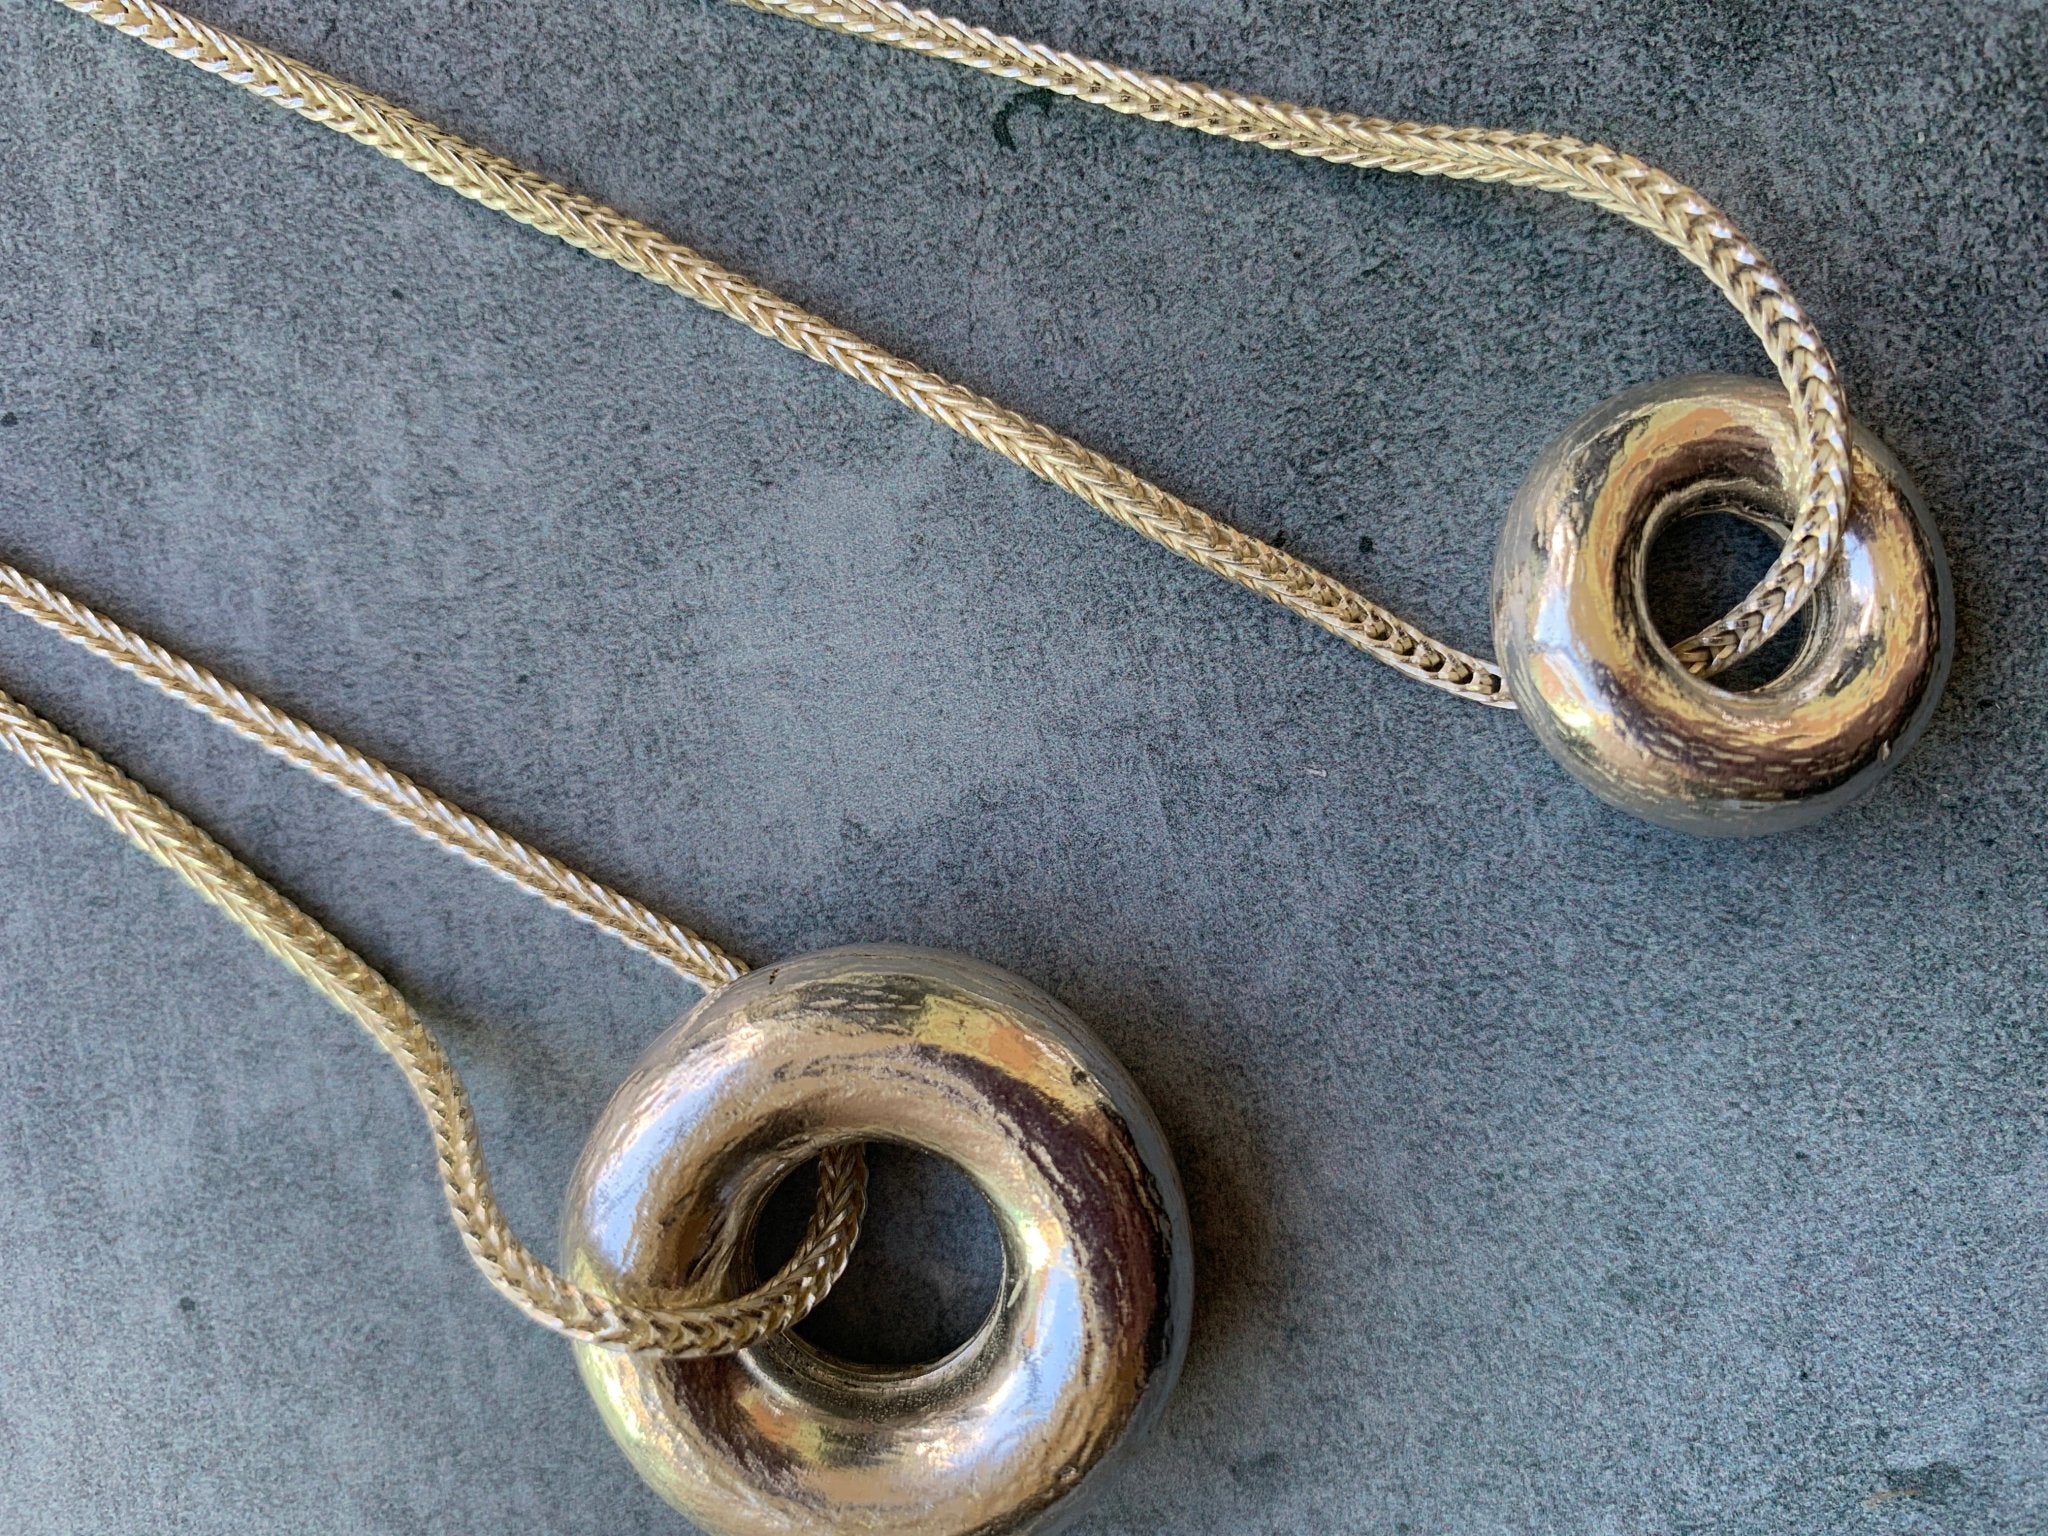 Gold or Silver Donut necklace by Elisabeth Riveiro - Natalia Willmott